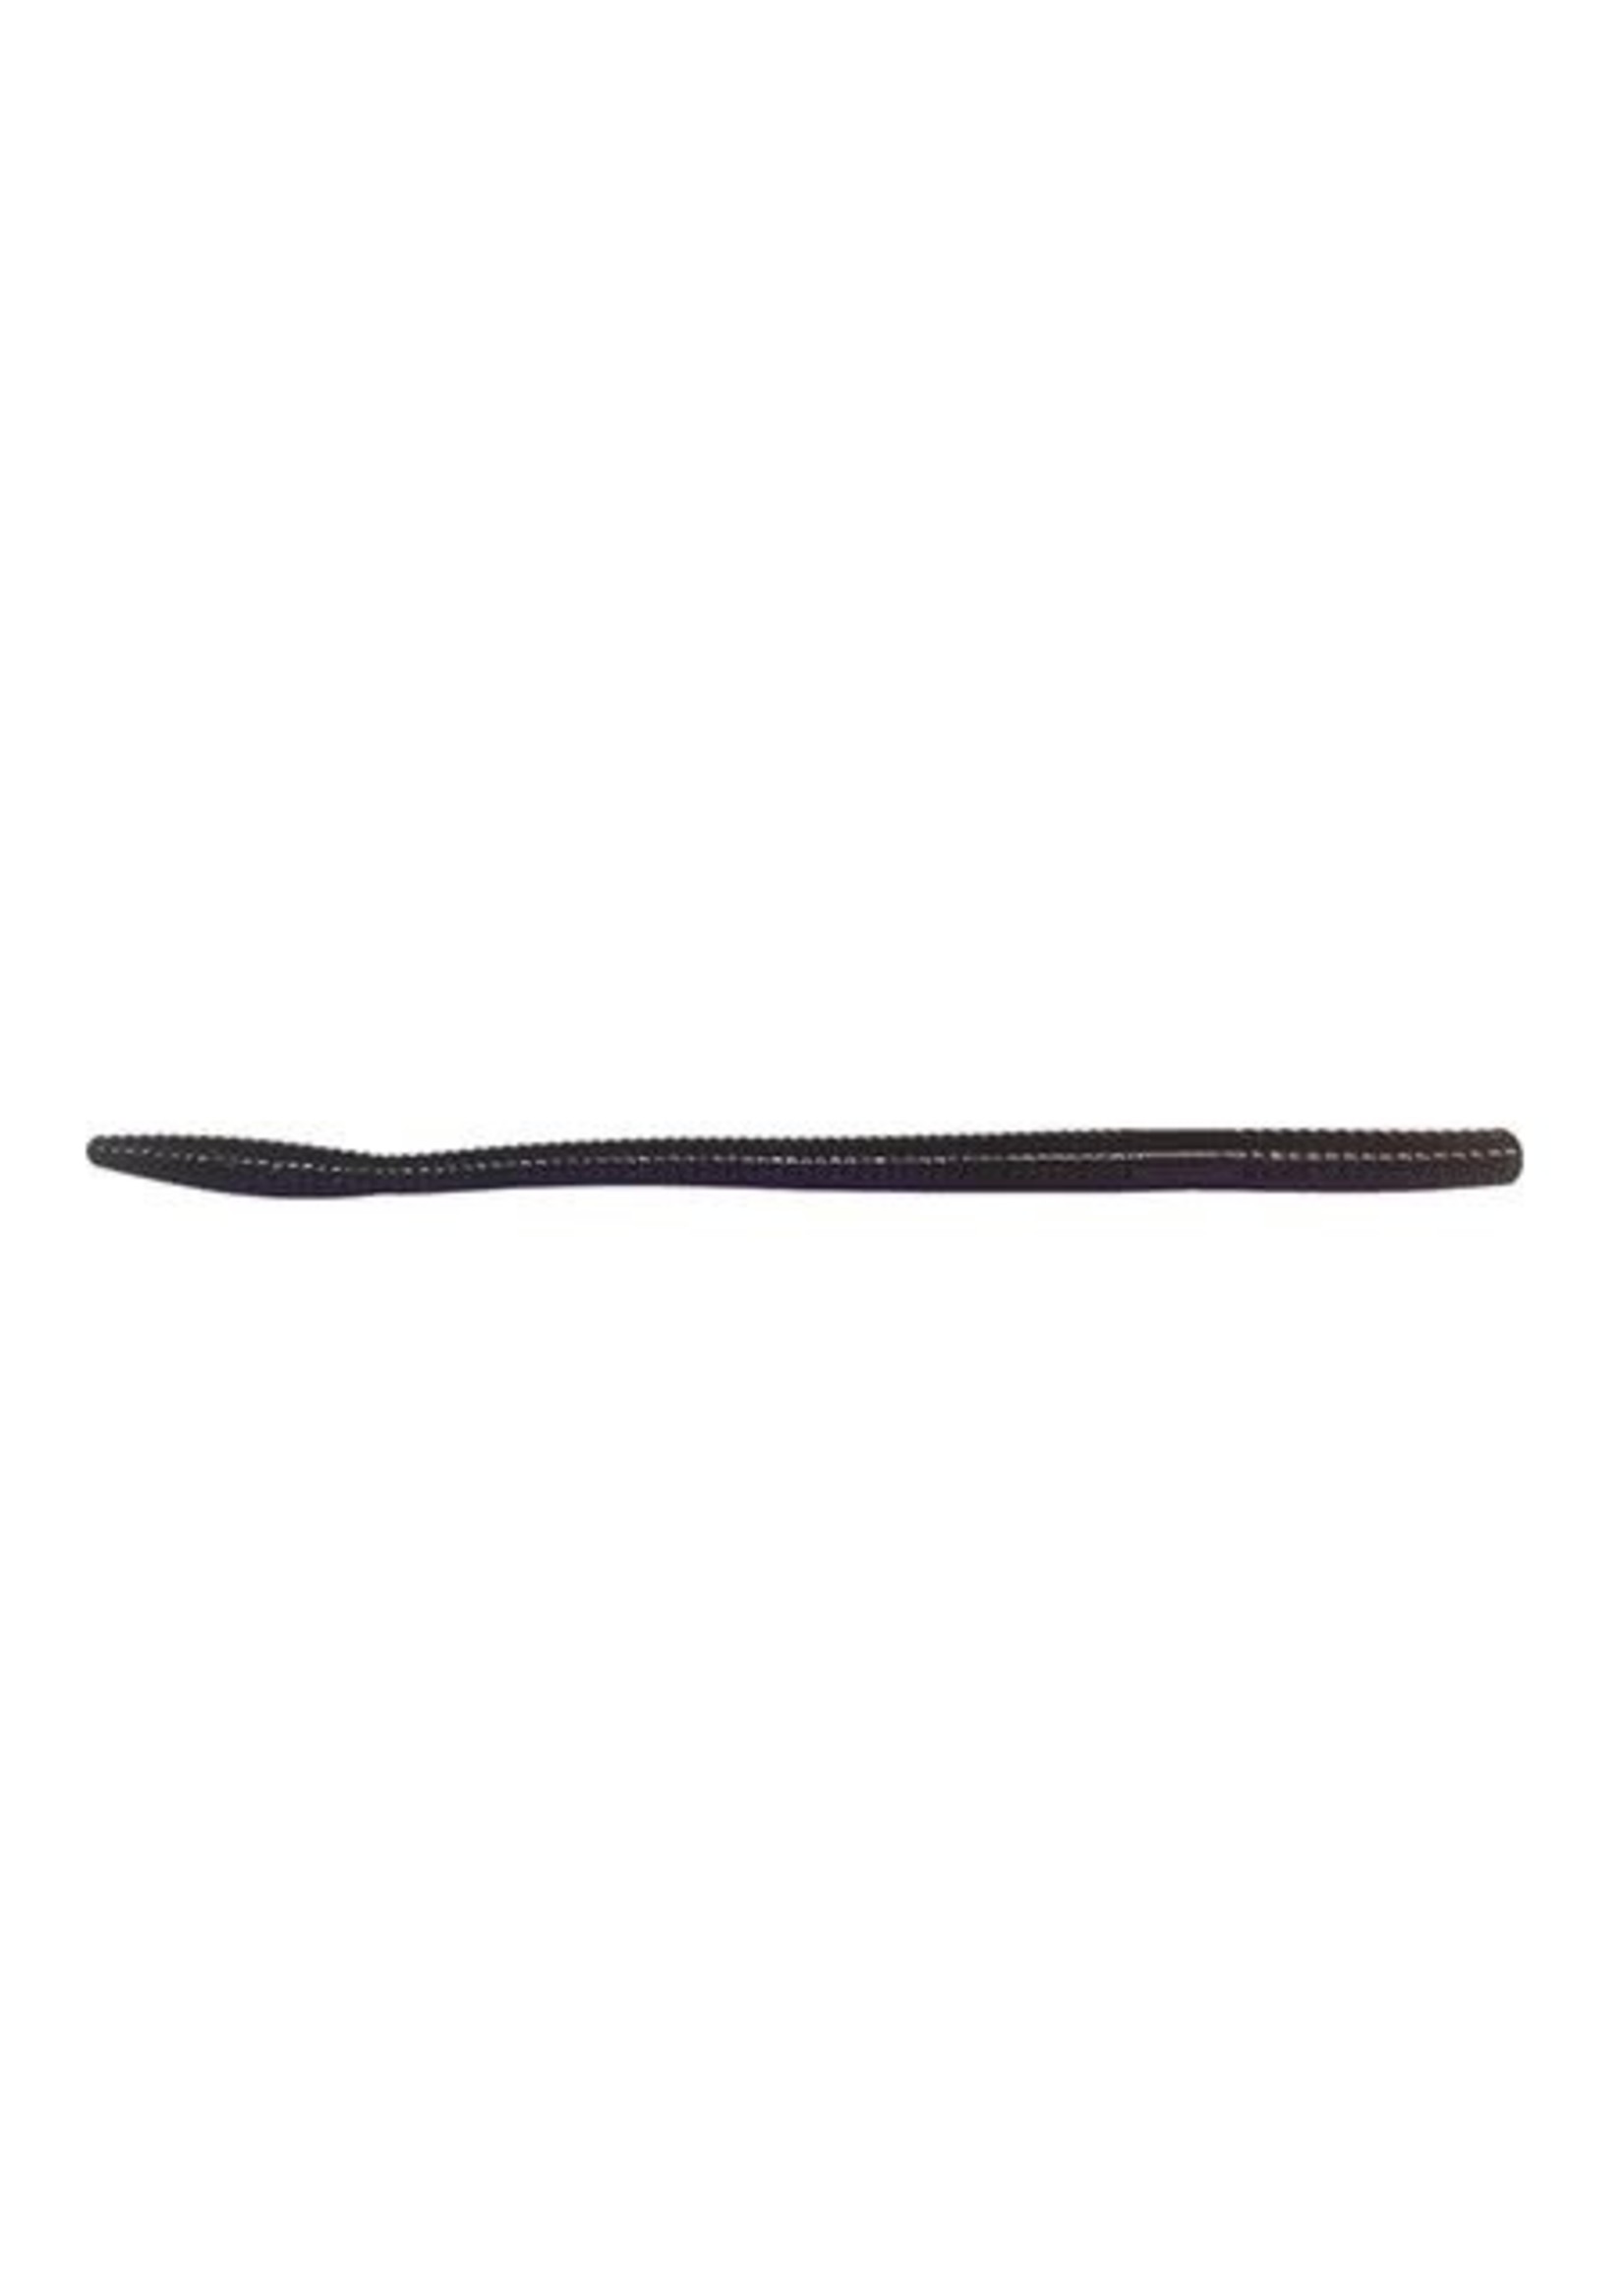 DOA C.A.L. Finesse Worms -Tick 8" - Black Grape Shad